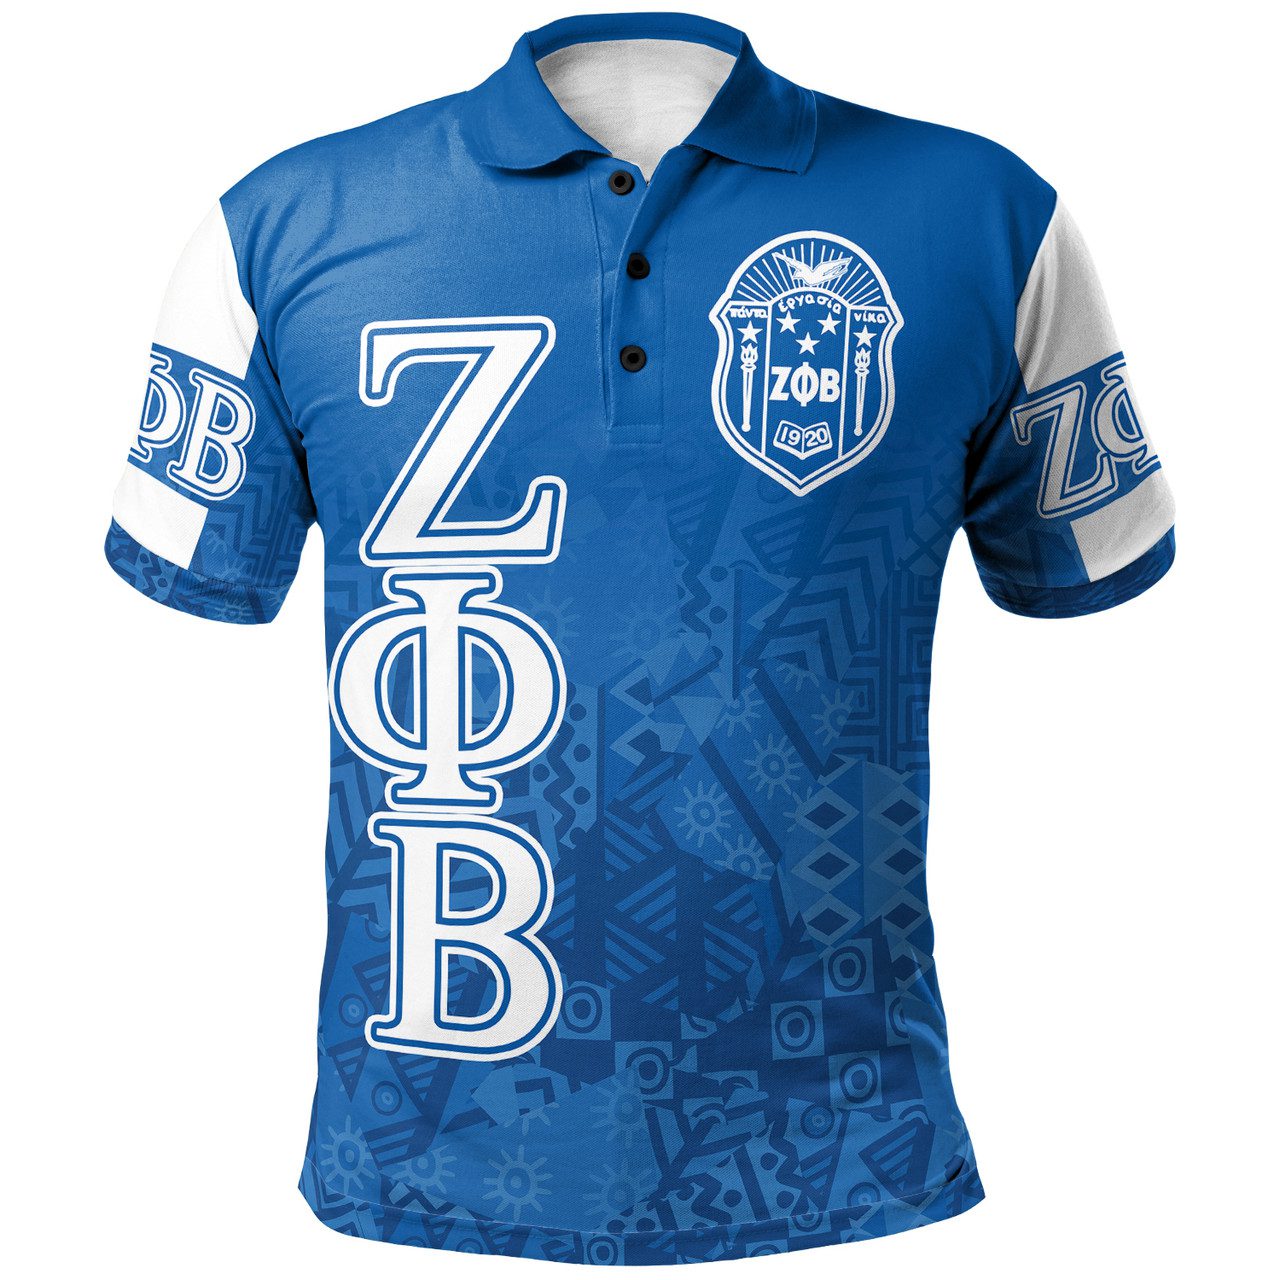 Zeta Phi Beta Polo Shirt – Sorority Black Roots Polo Shirt